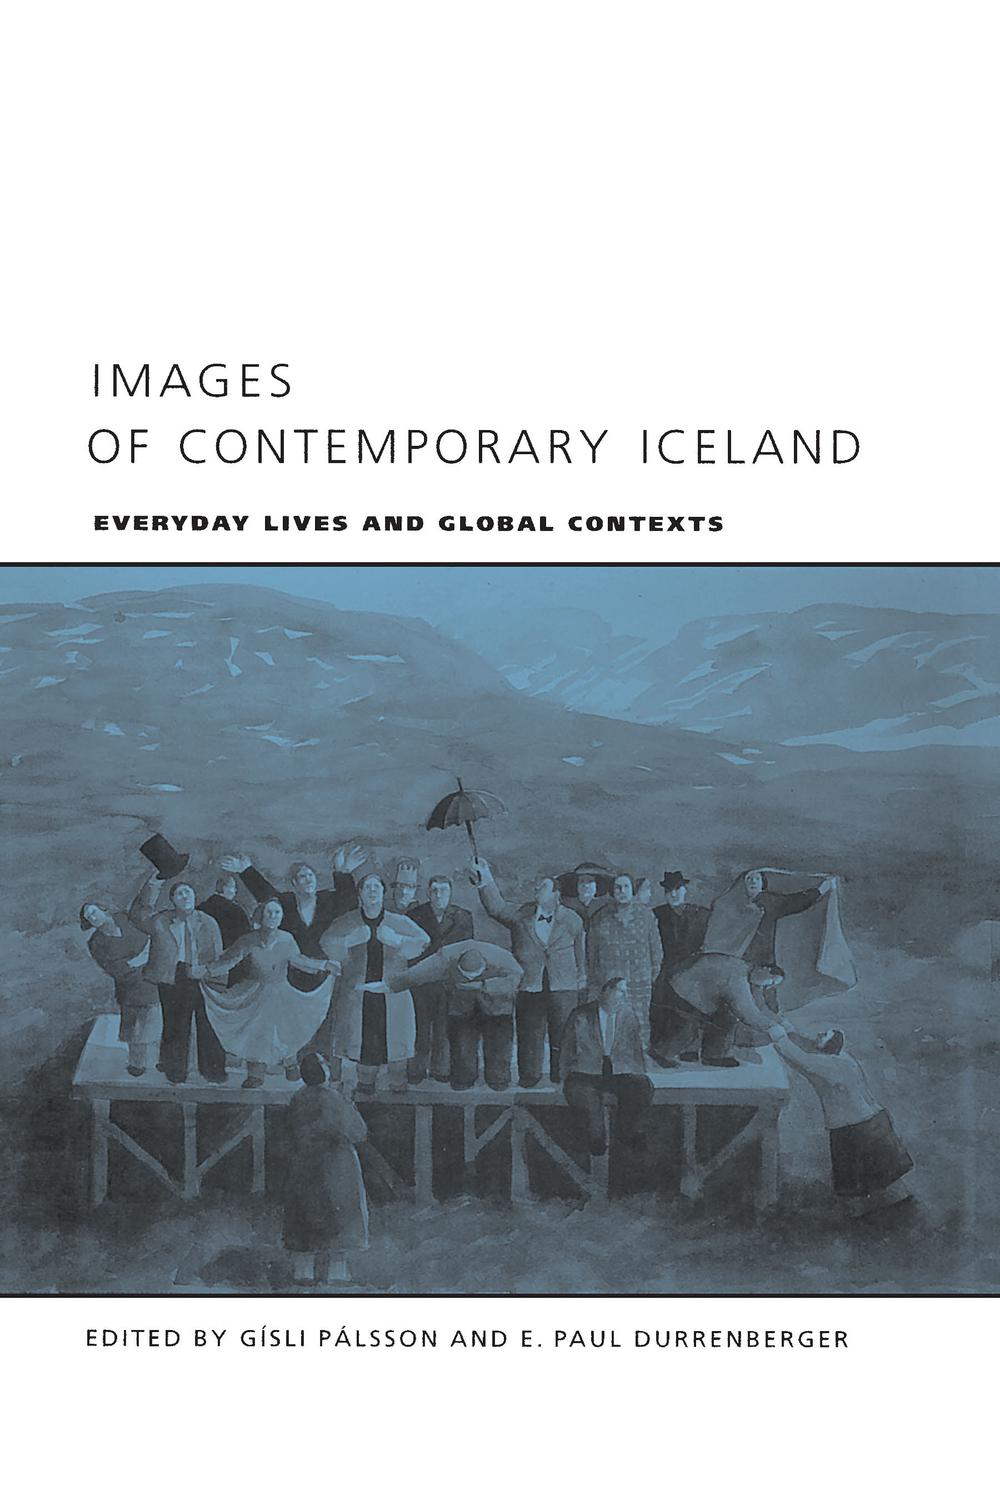 Images of Contemporary Iceland - Gisli Palsson, E. Paul Durrenberger